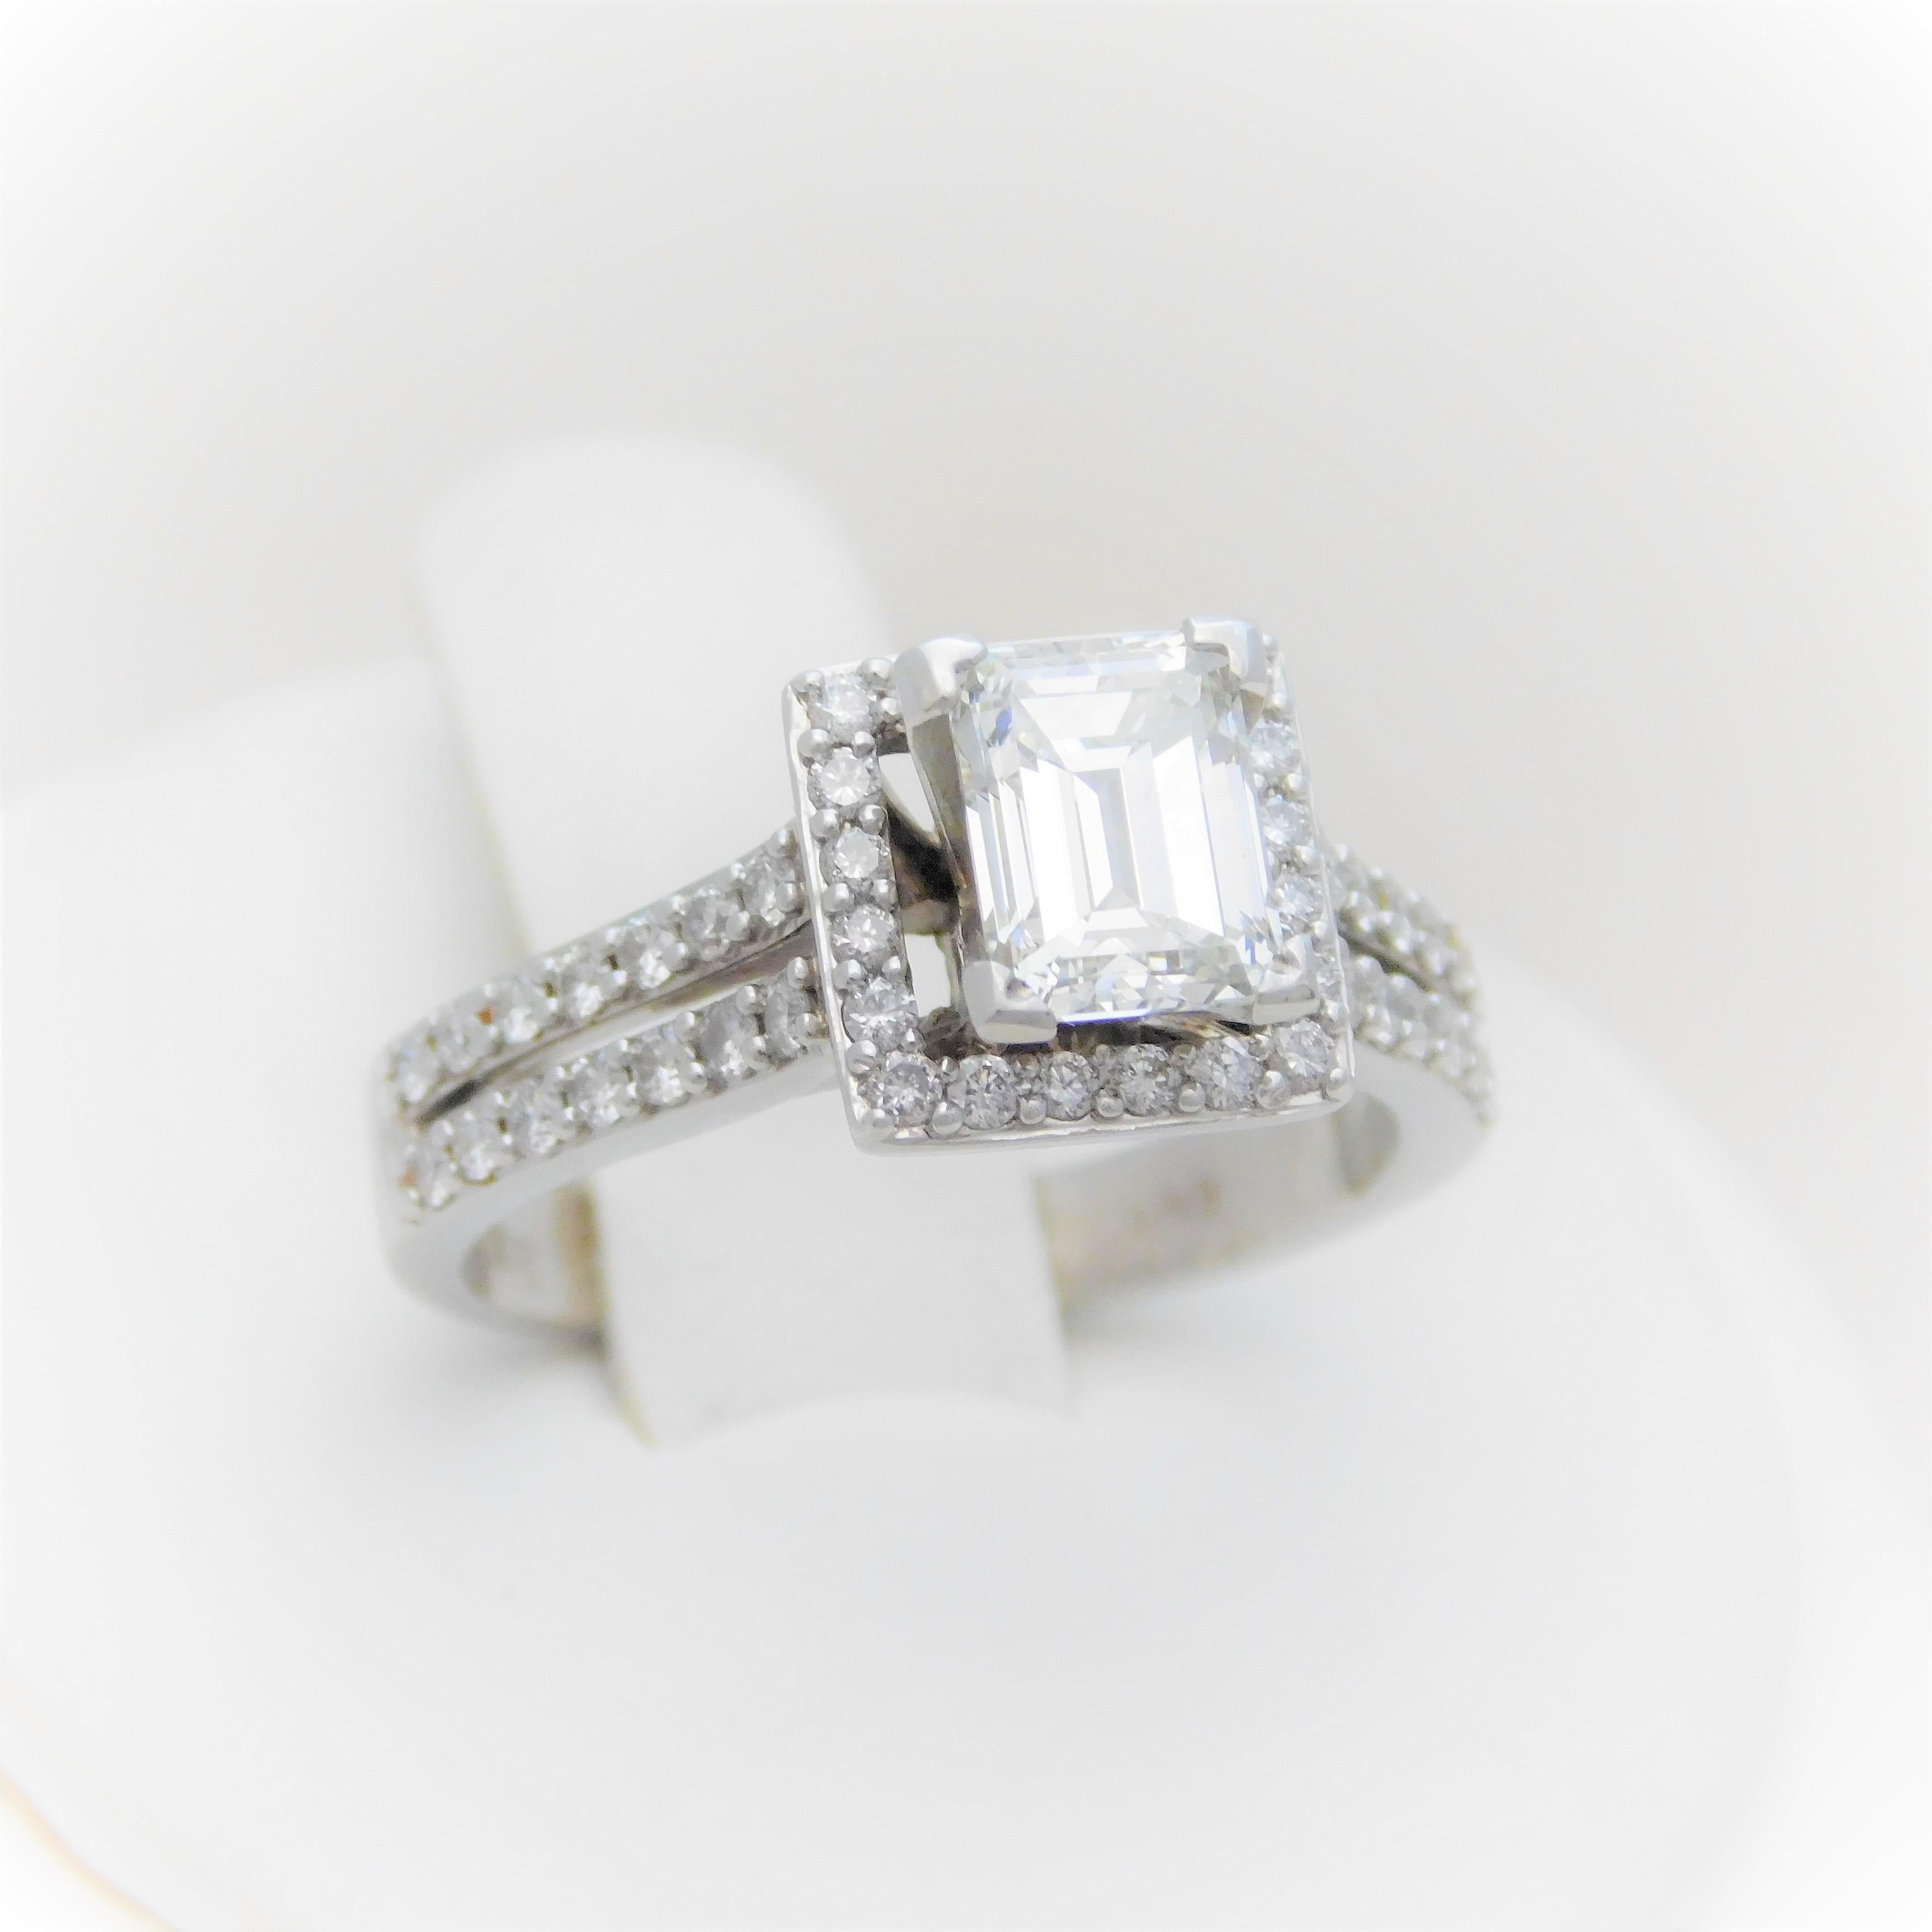 UGS Certified 2.18 Carat Emerald Cut Diamond Engagement Ring 4